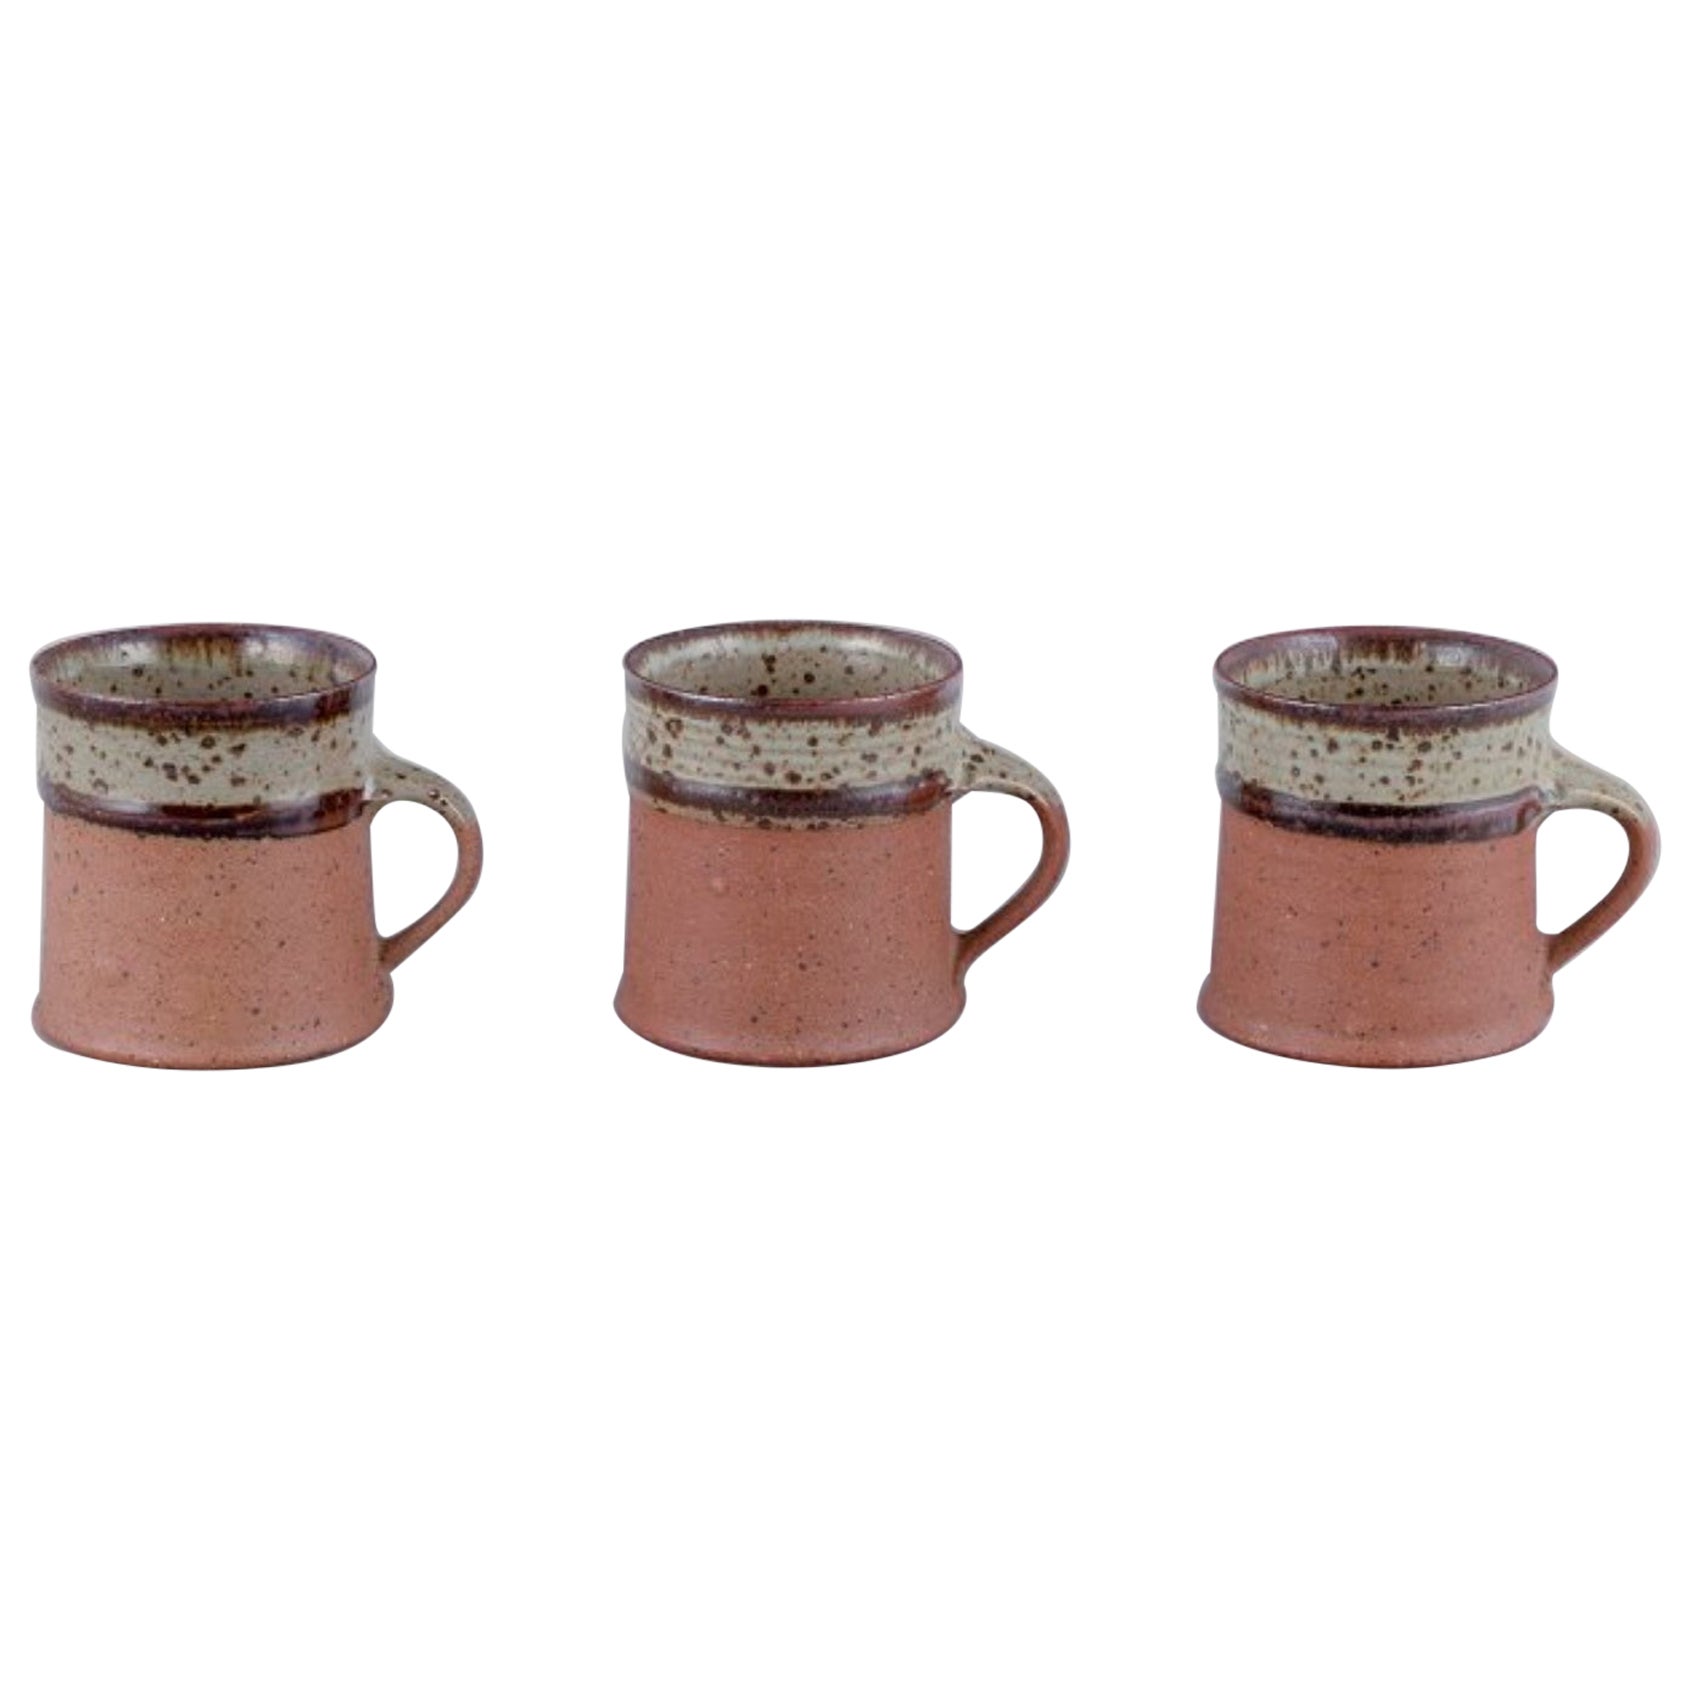 Nysted Ceramics, Dänemark. Drei Tassen aus Keramik in braunen Farbtönen.